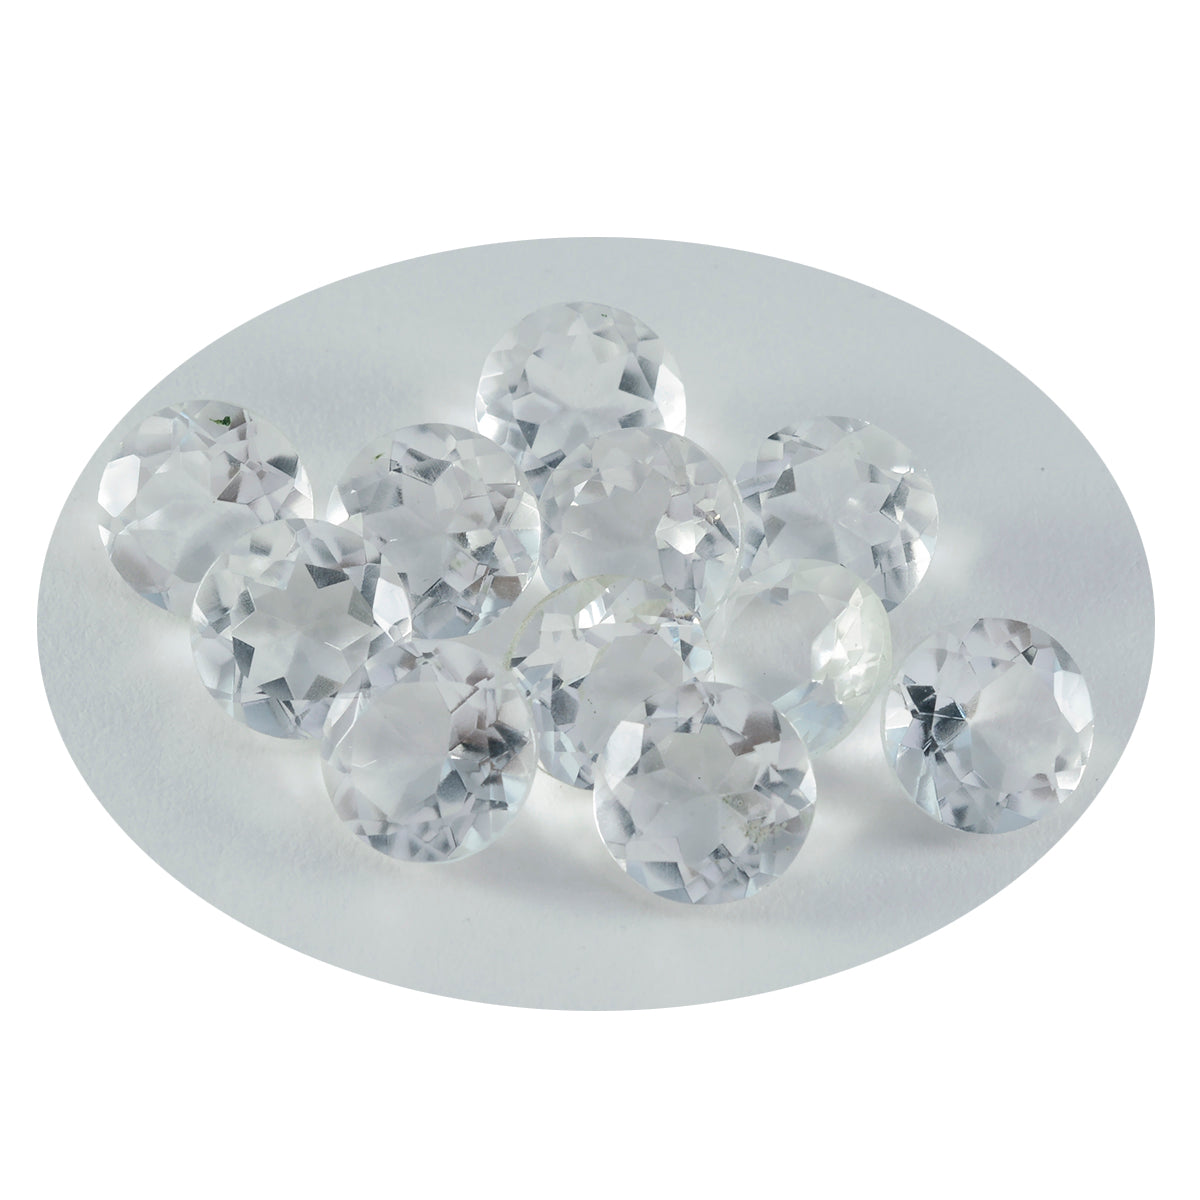 Riyogems 1PC White Crystal Quartz Faceted 9x9 mm Round Shape AAA Quality Loose Gems